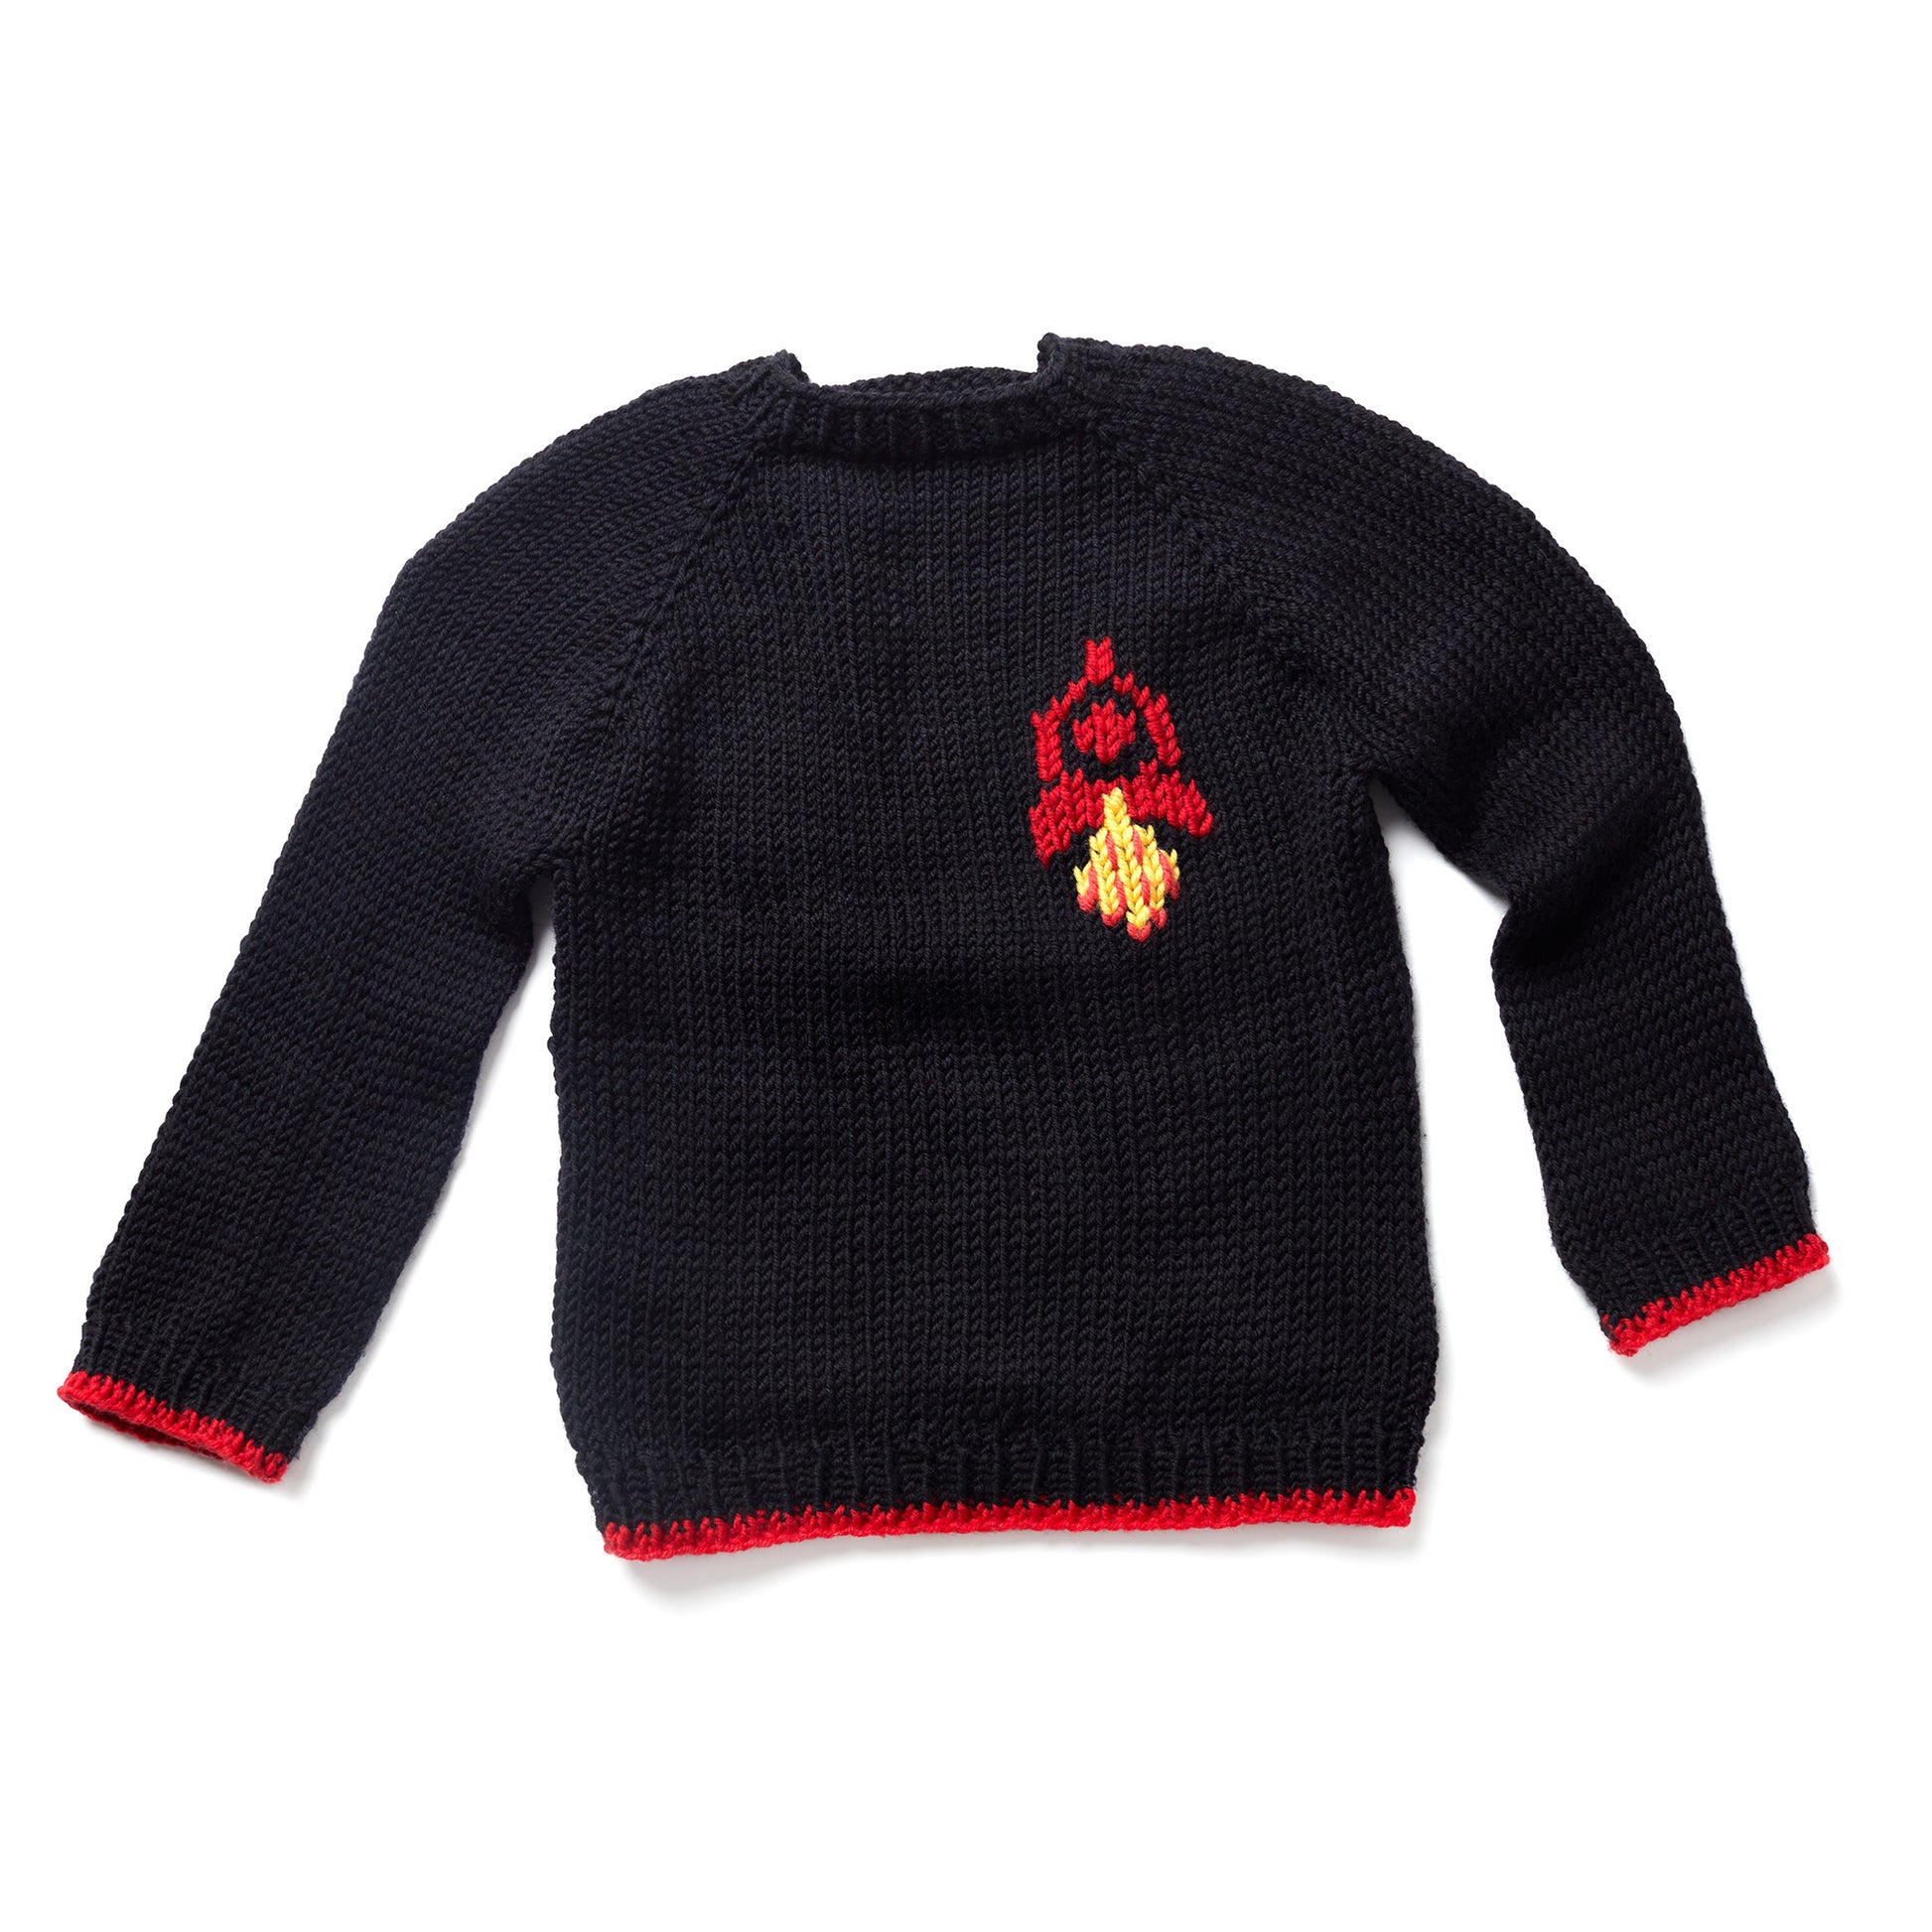 Free Red Heart Chic Knit Rocket Ship Sweater Pattern